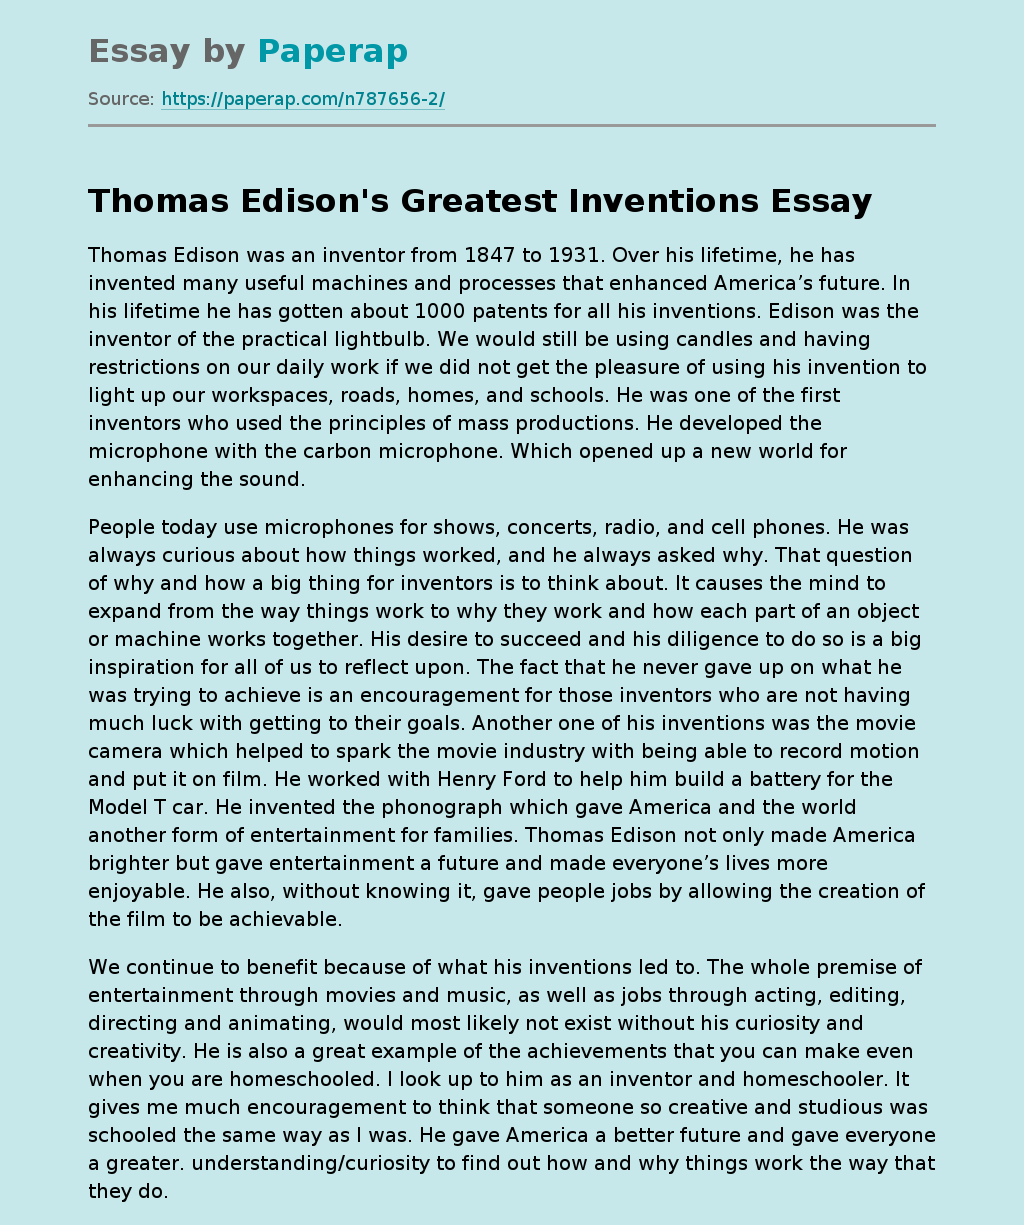 Thomas Edison's Greatest Inventions